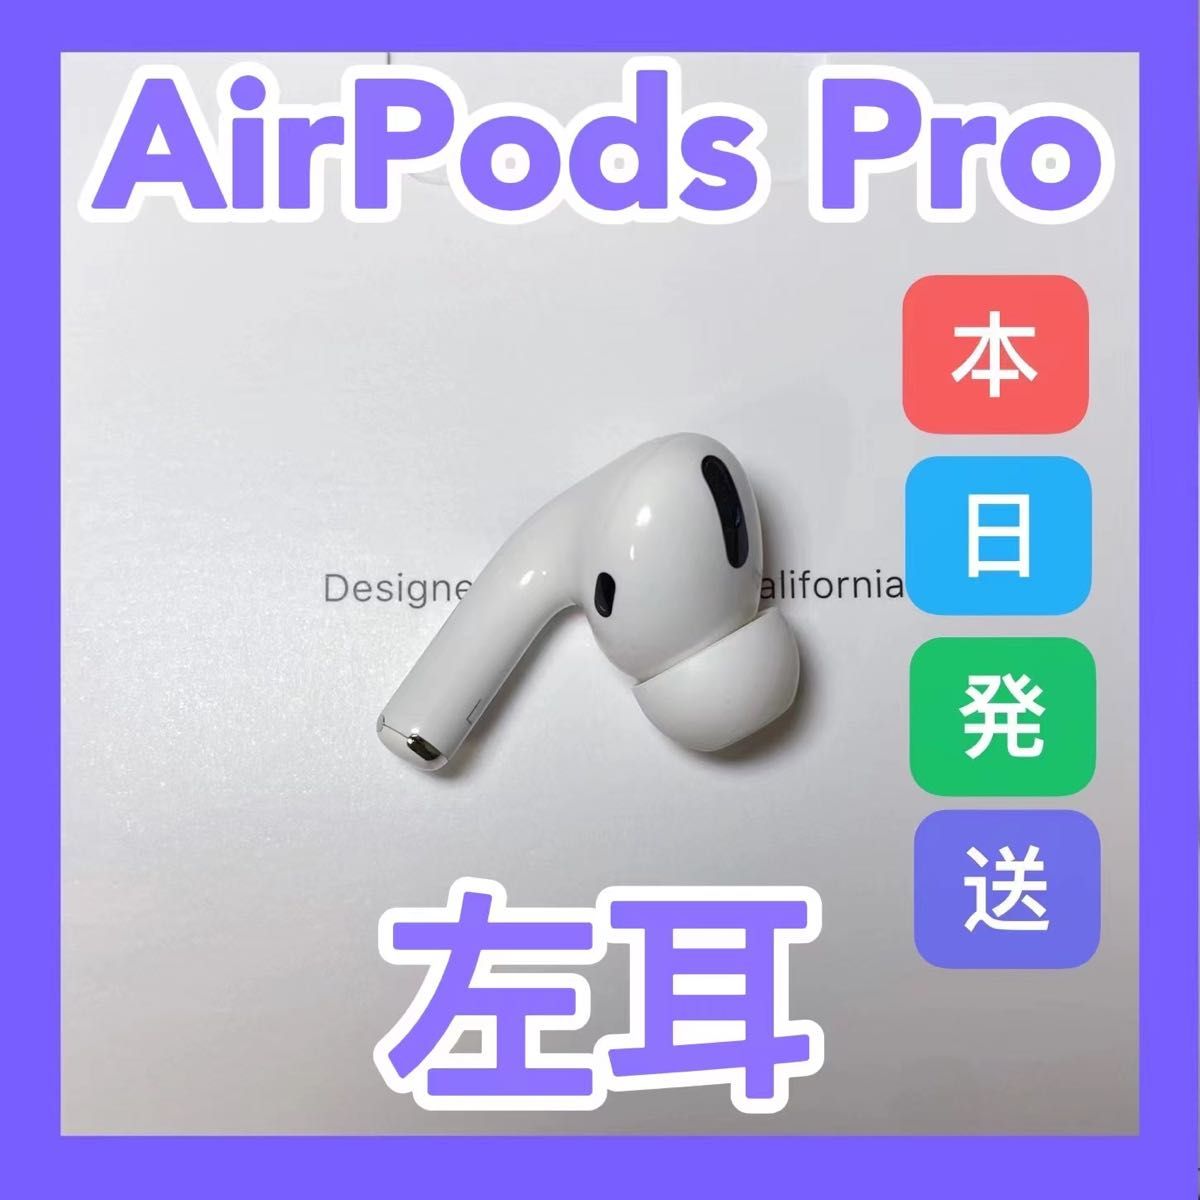 AirPods pro 第二世代 新品 左耳 エアーポッズ 純正 Apple